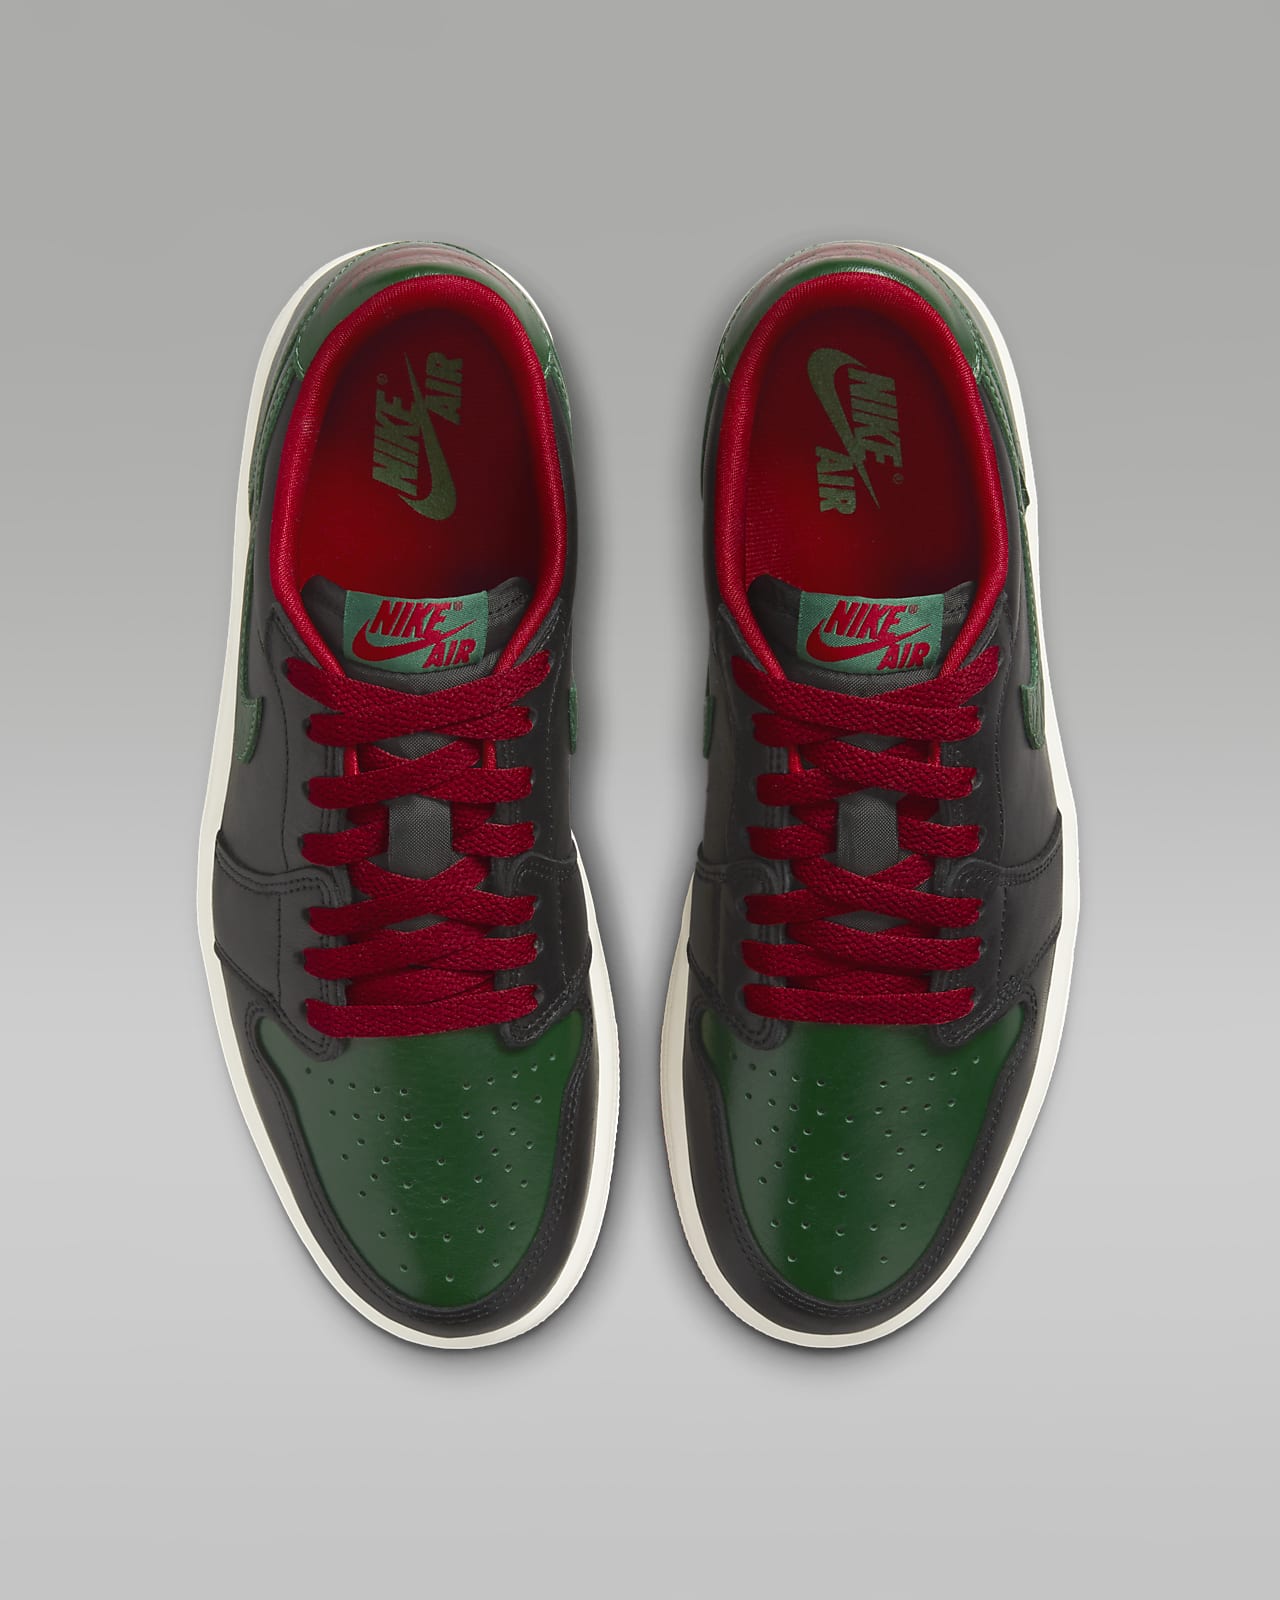 Air Jordan 1 Low OG Black/Gorge Green Women's Shoes